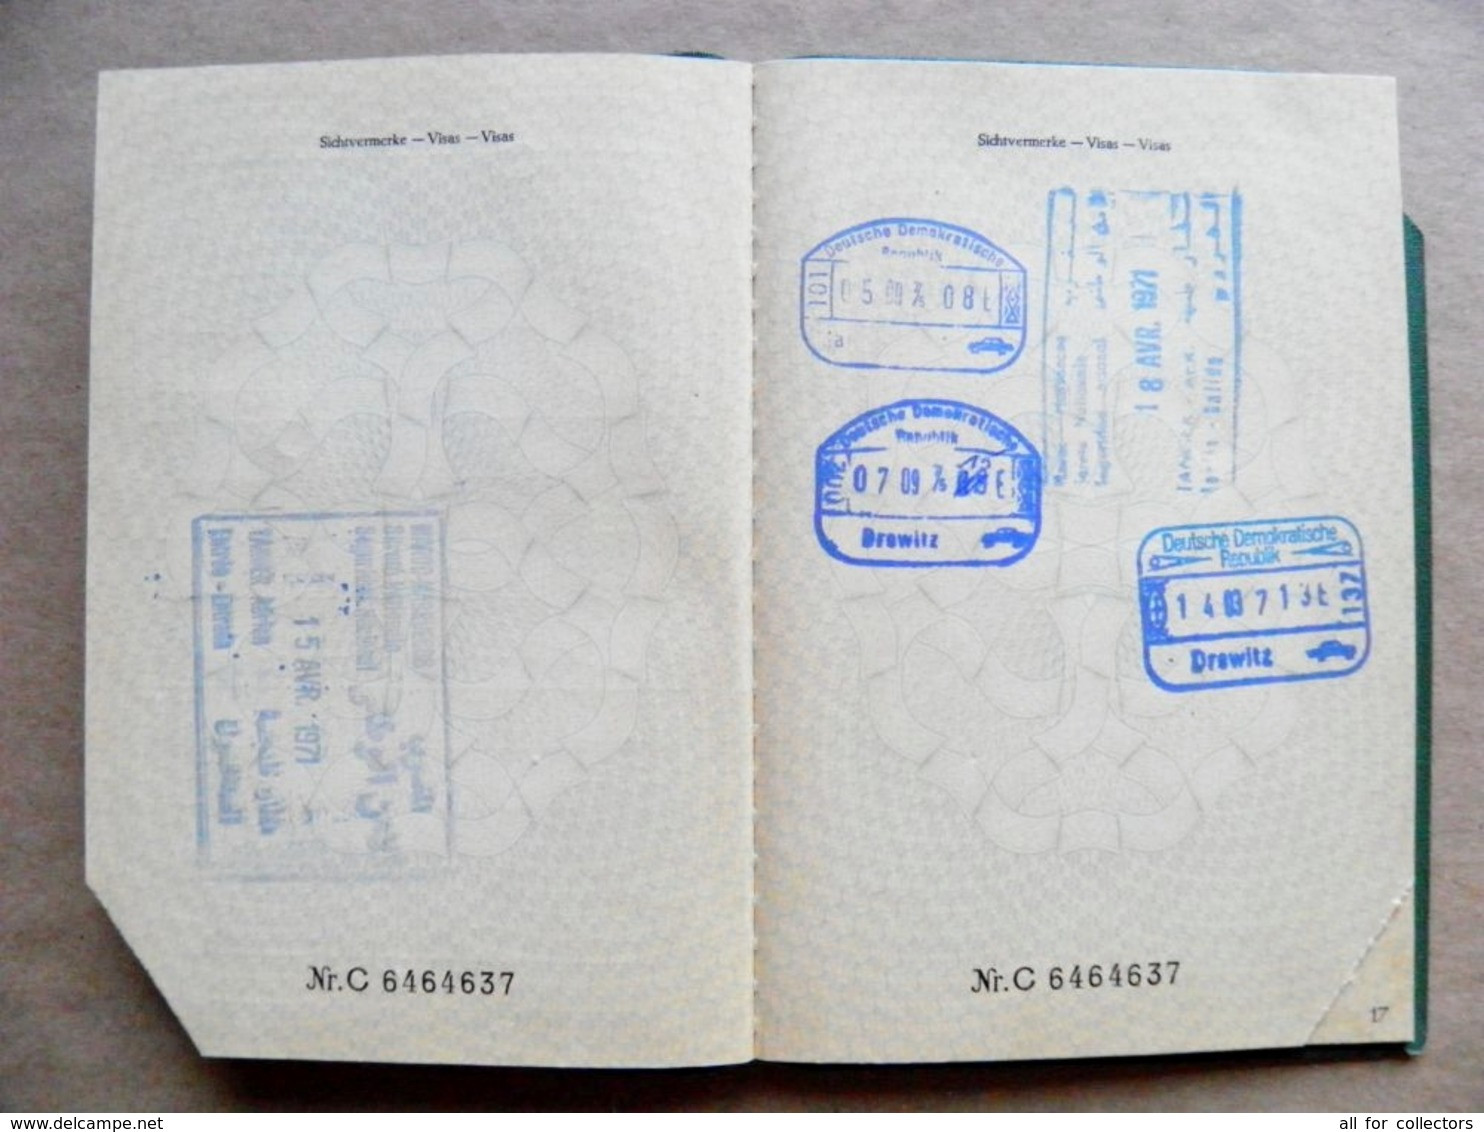 Reisepass Passport Germany Deutschland 1971 Bremen - Historische Documenten